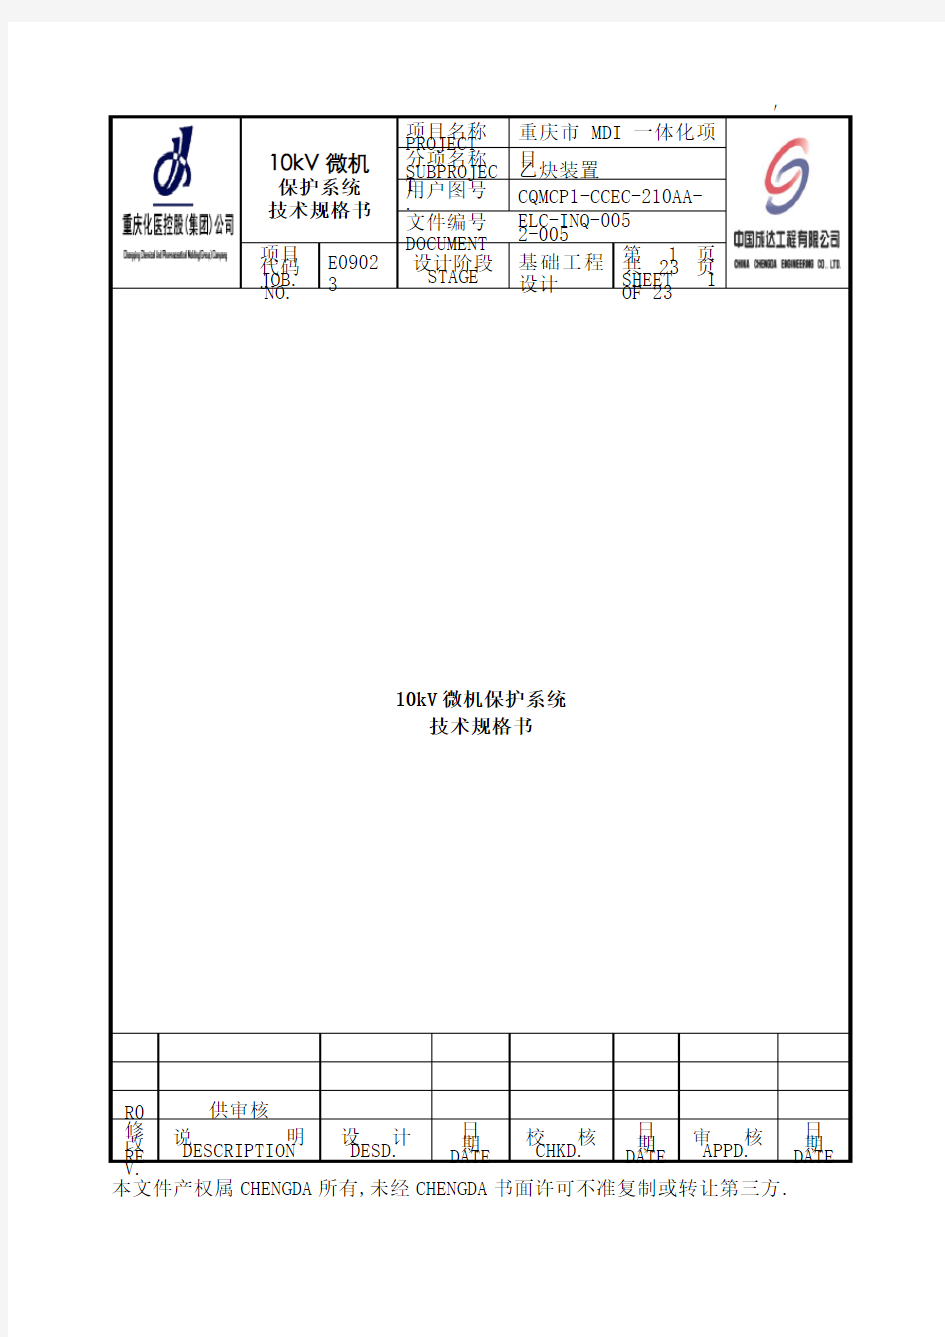 kV微机保护系统技术规格书(终审稿)